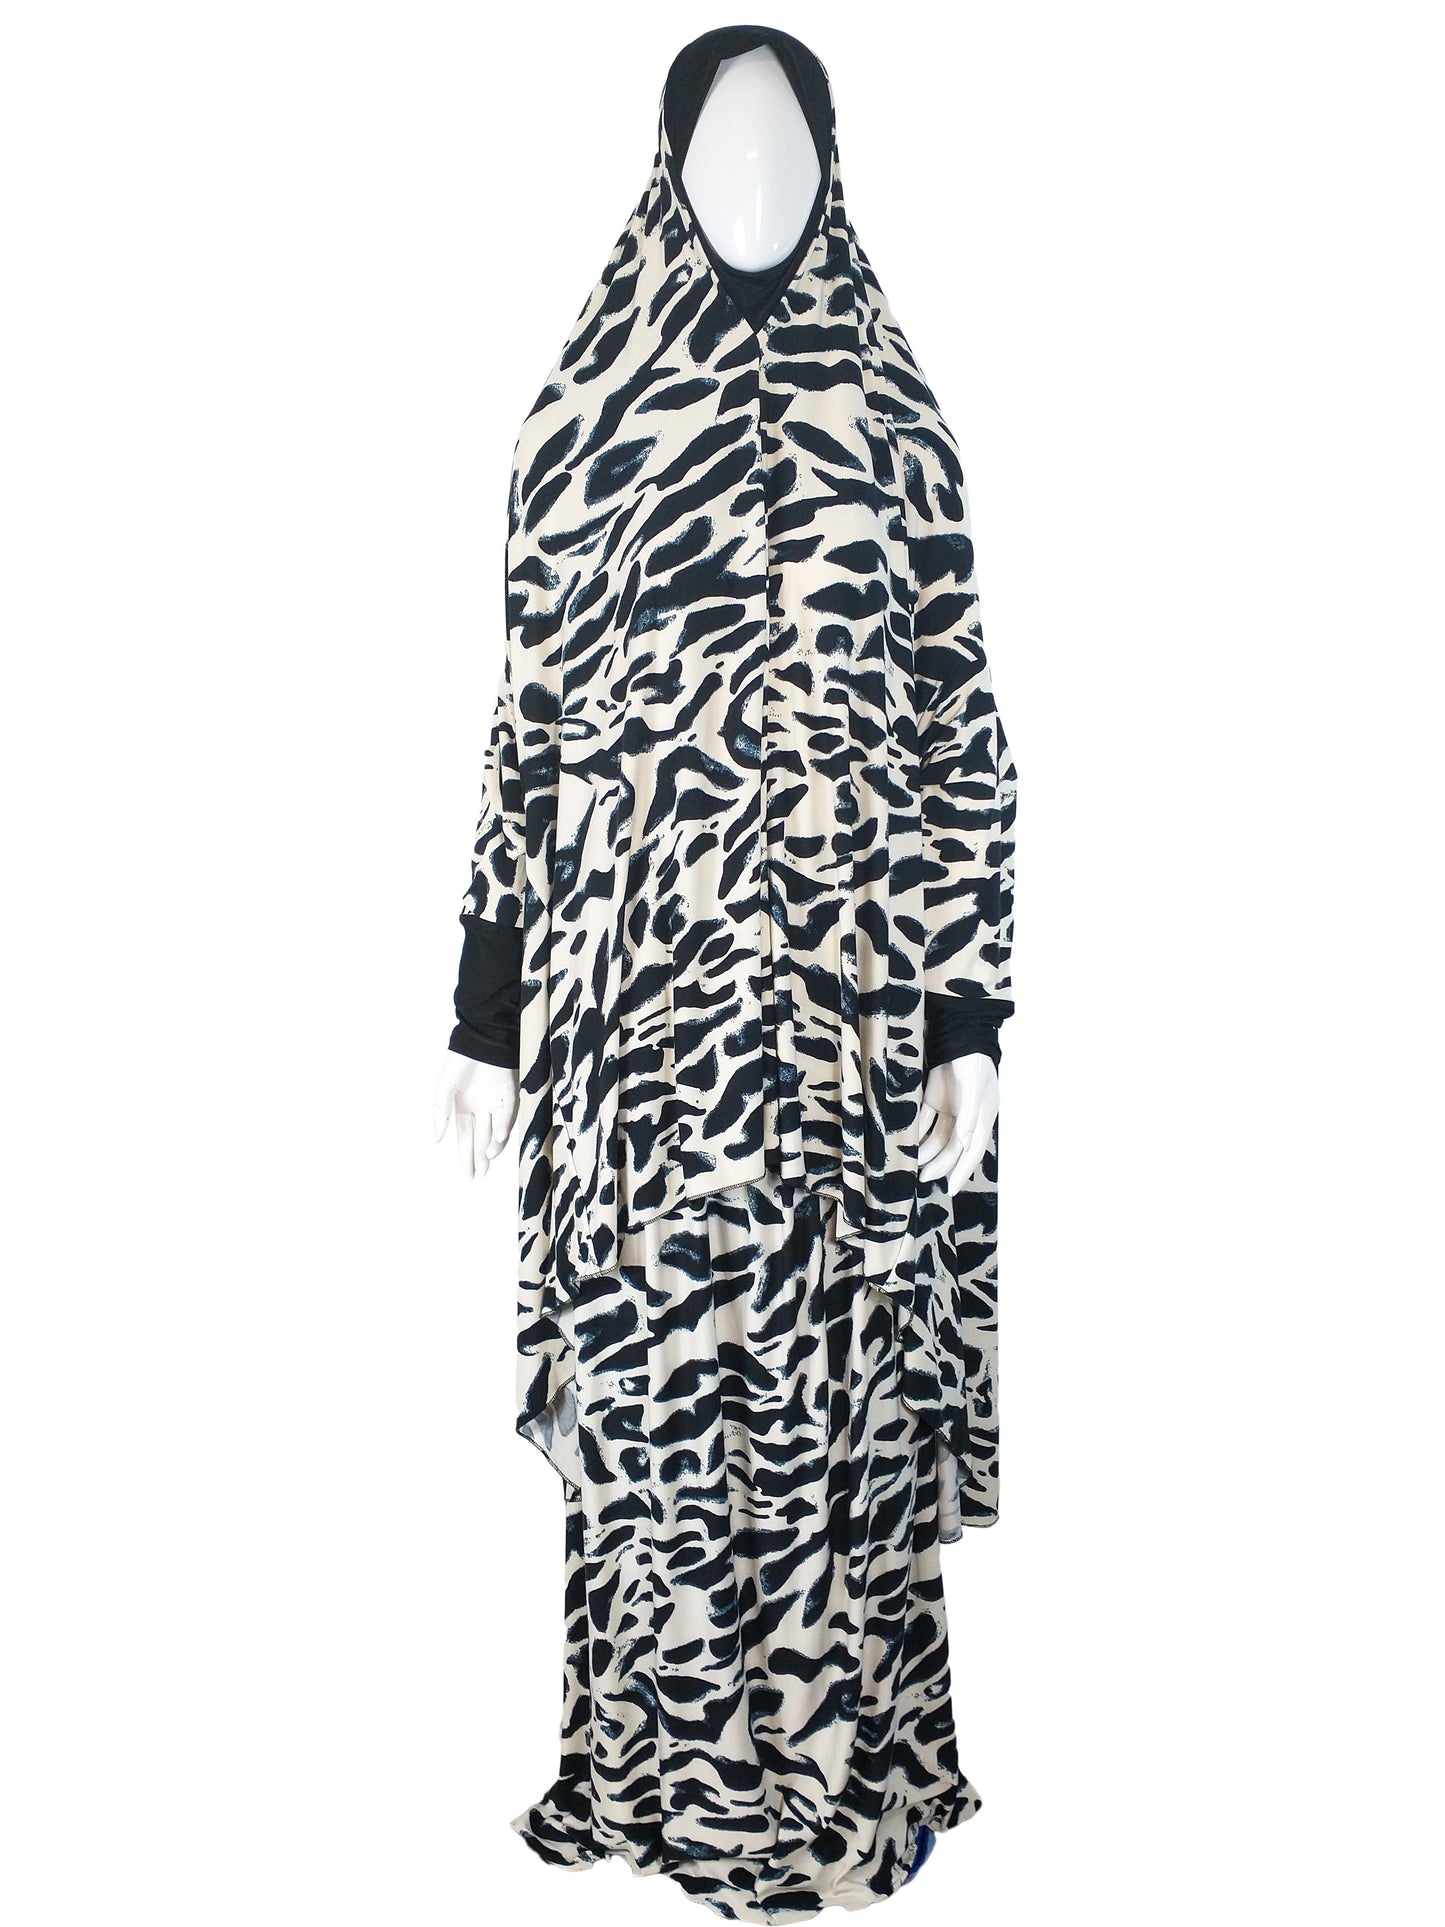 Abstract Black White Two Piece Prayer Dress - Smile Europe Wholesale 